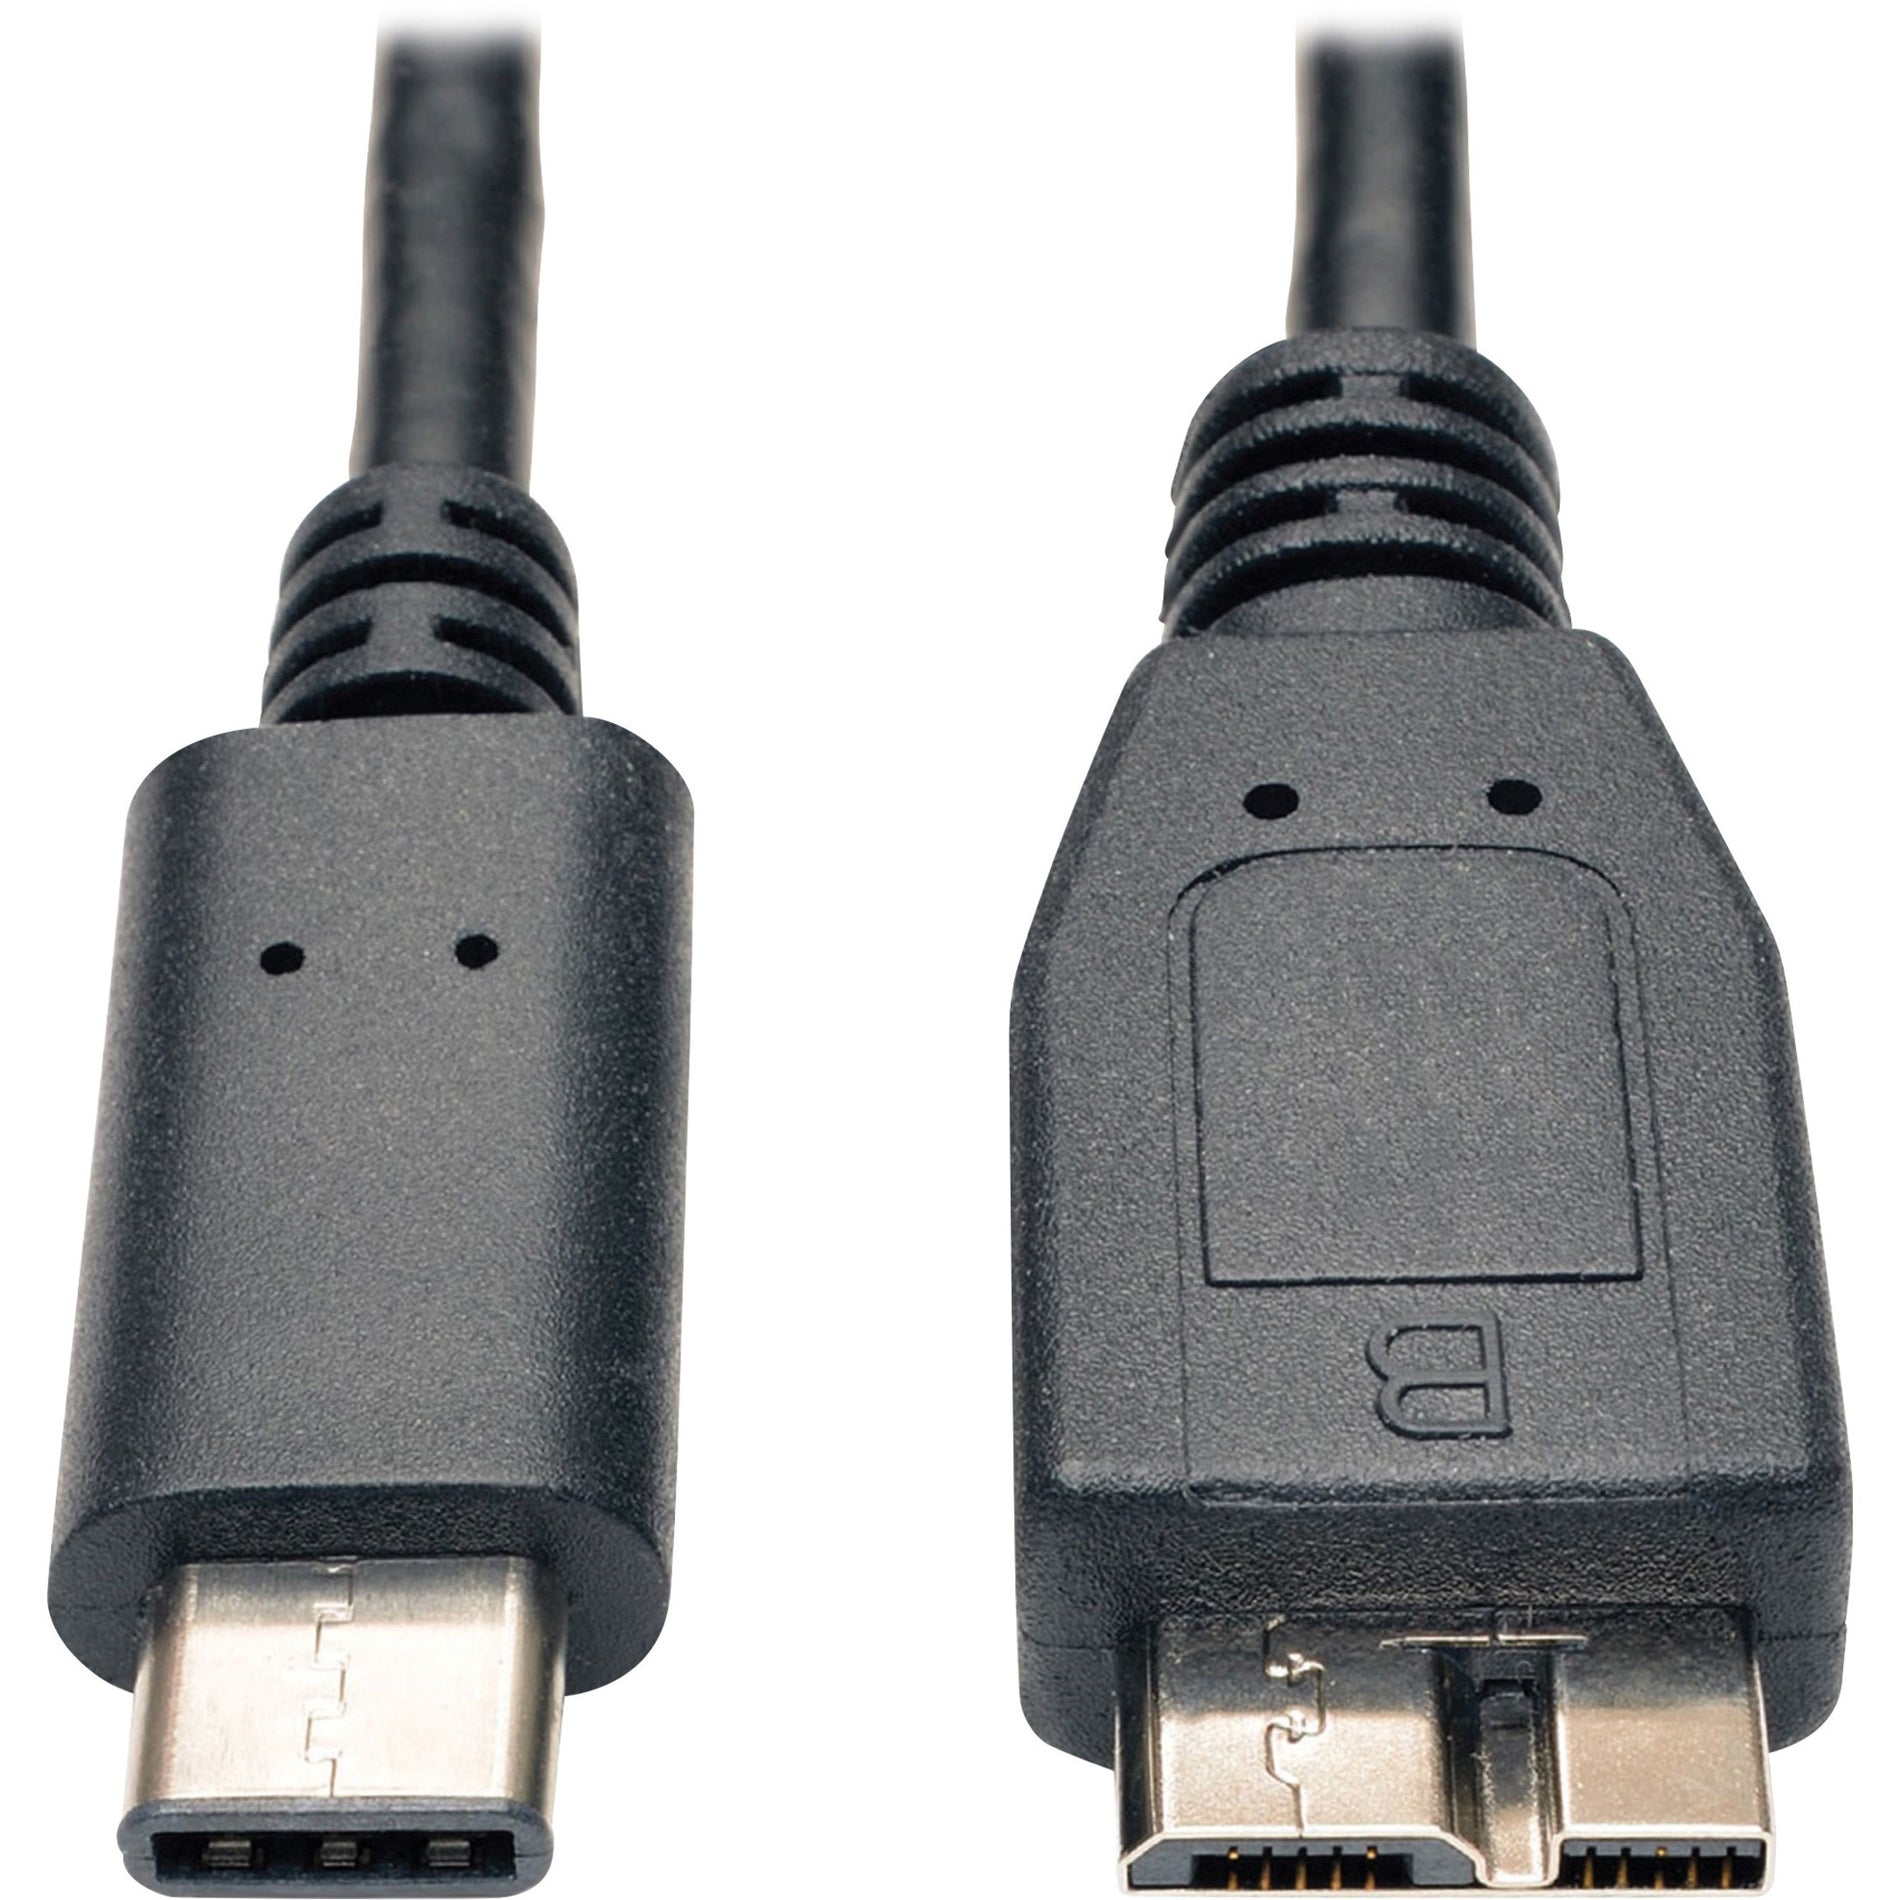 Tripp Lite U426-003-G2 USB 3.1 Gen 2 Cable, Type-C to USB 3.0 Micro-B, 3' L, Black, High-Speed Data Transfer